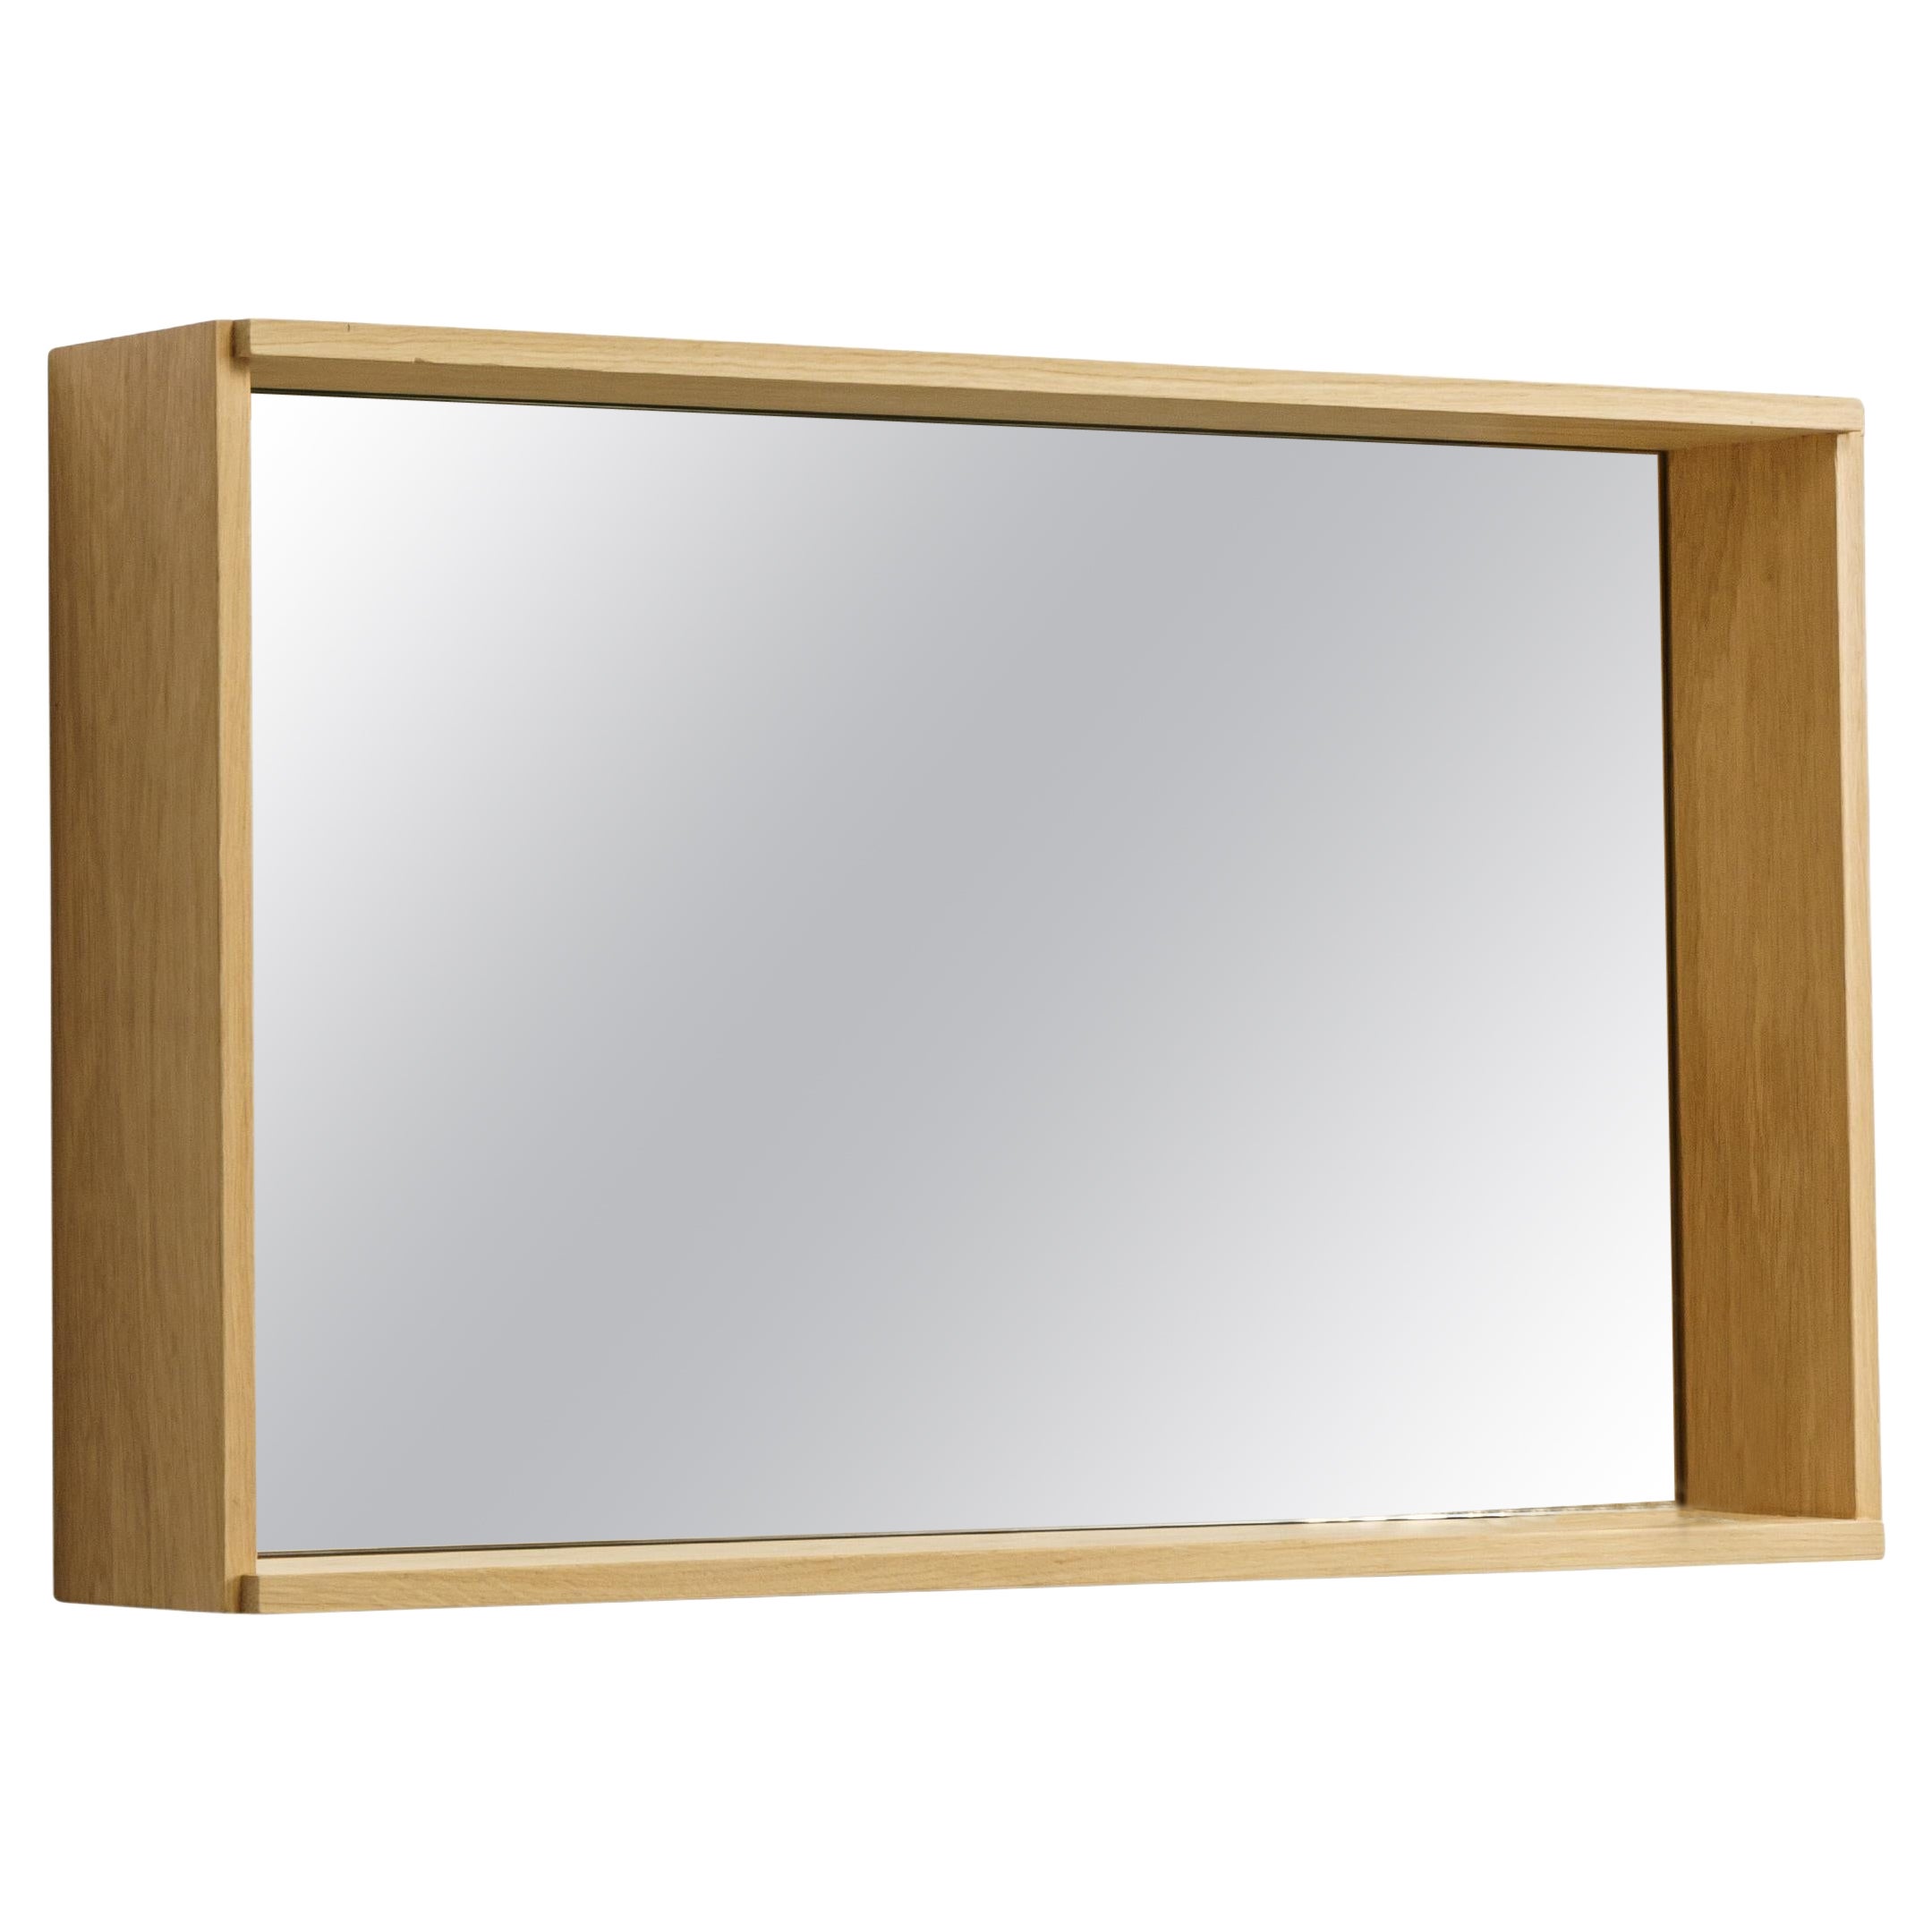 Minimalist oak mirror medium